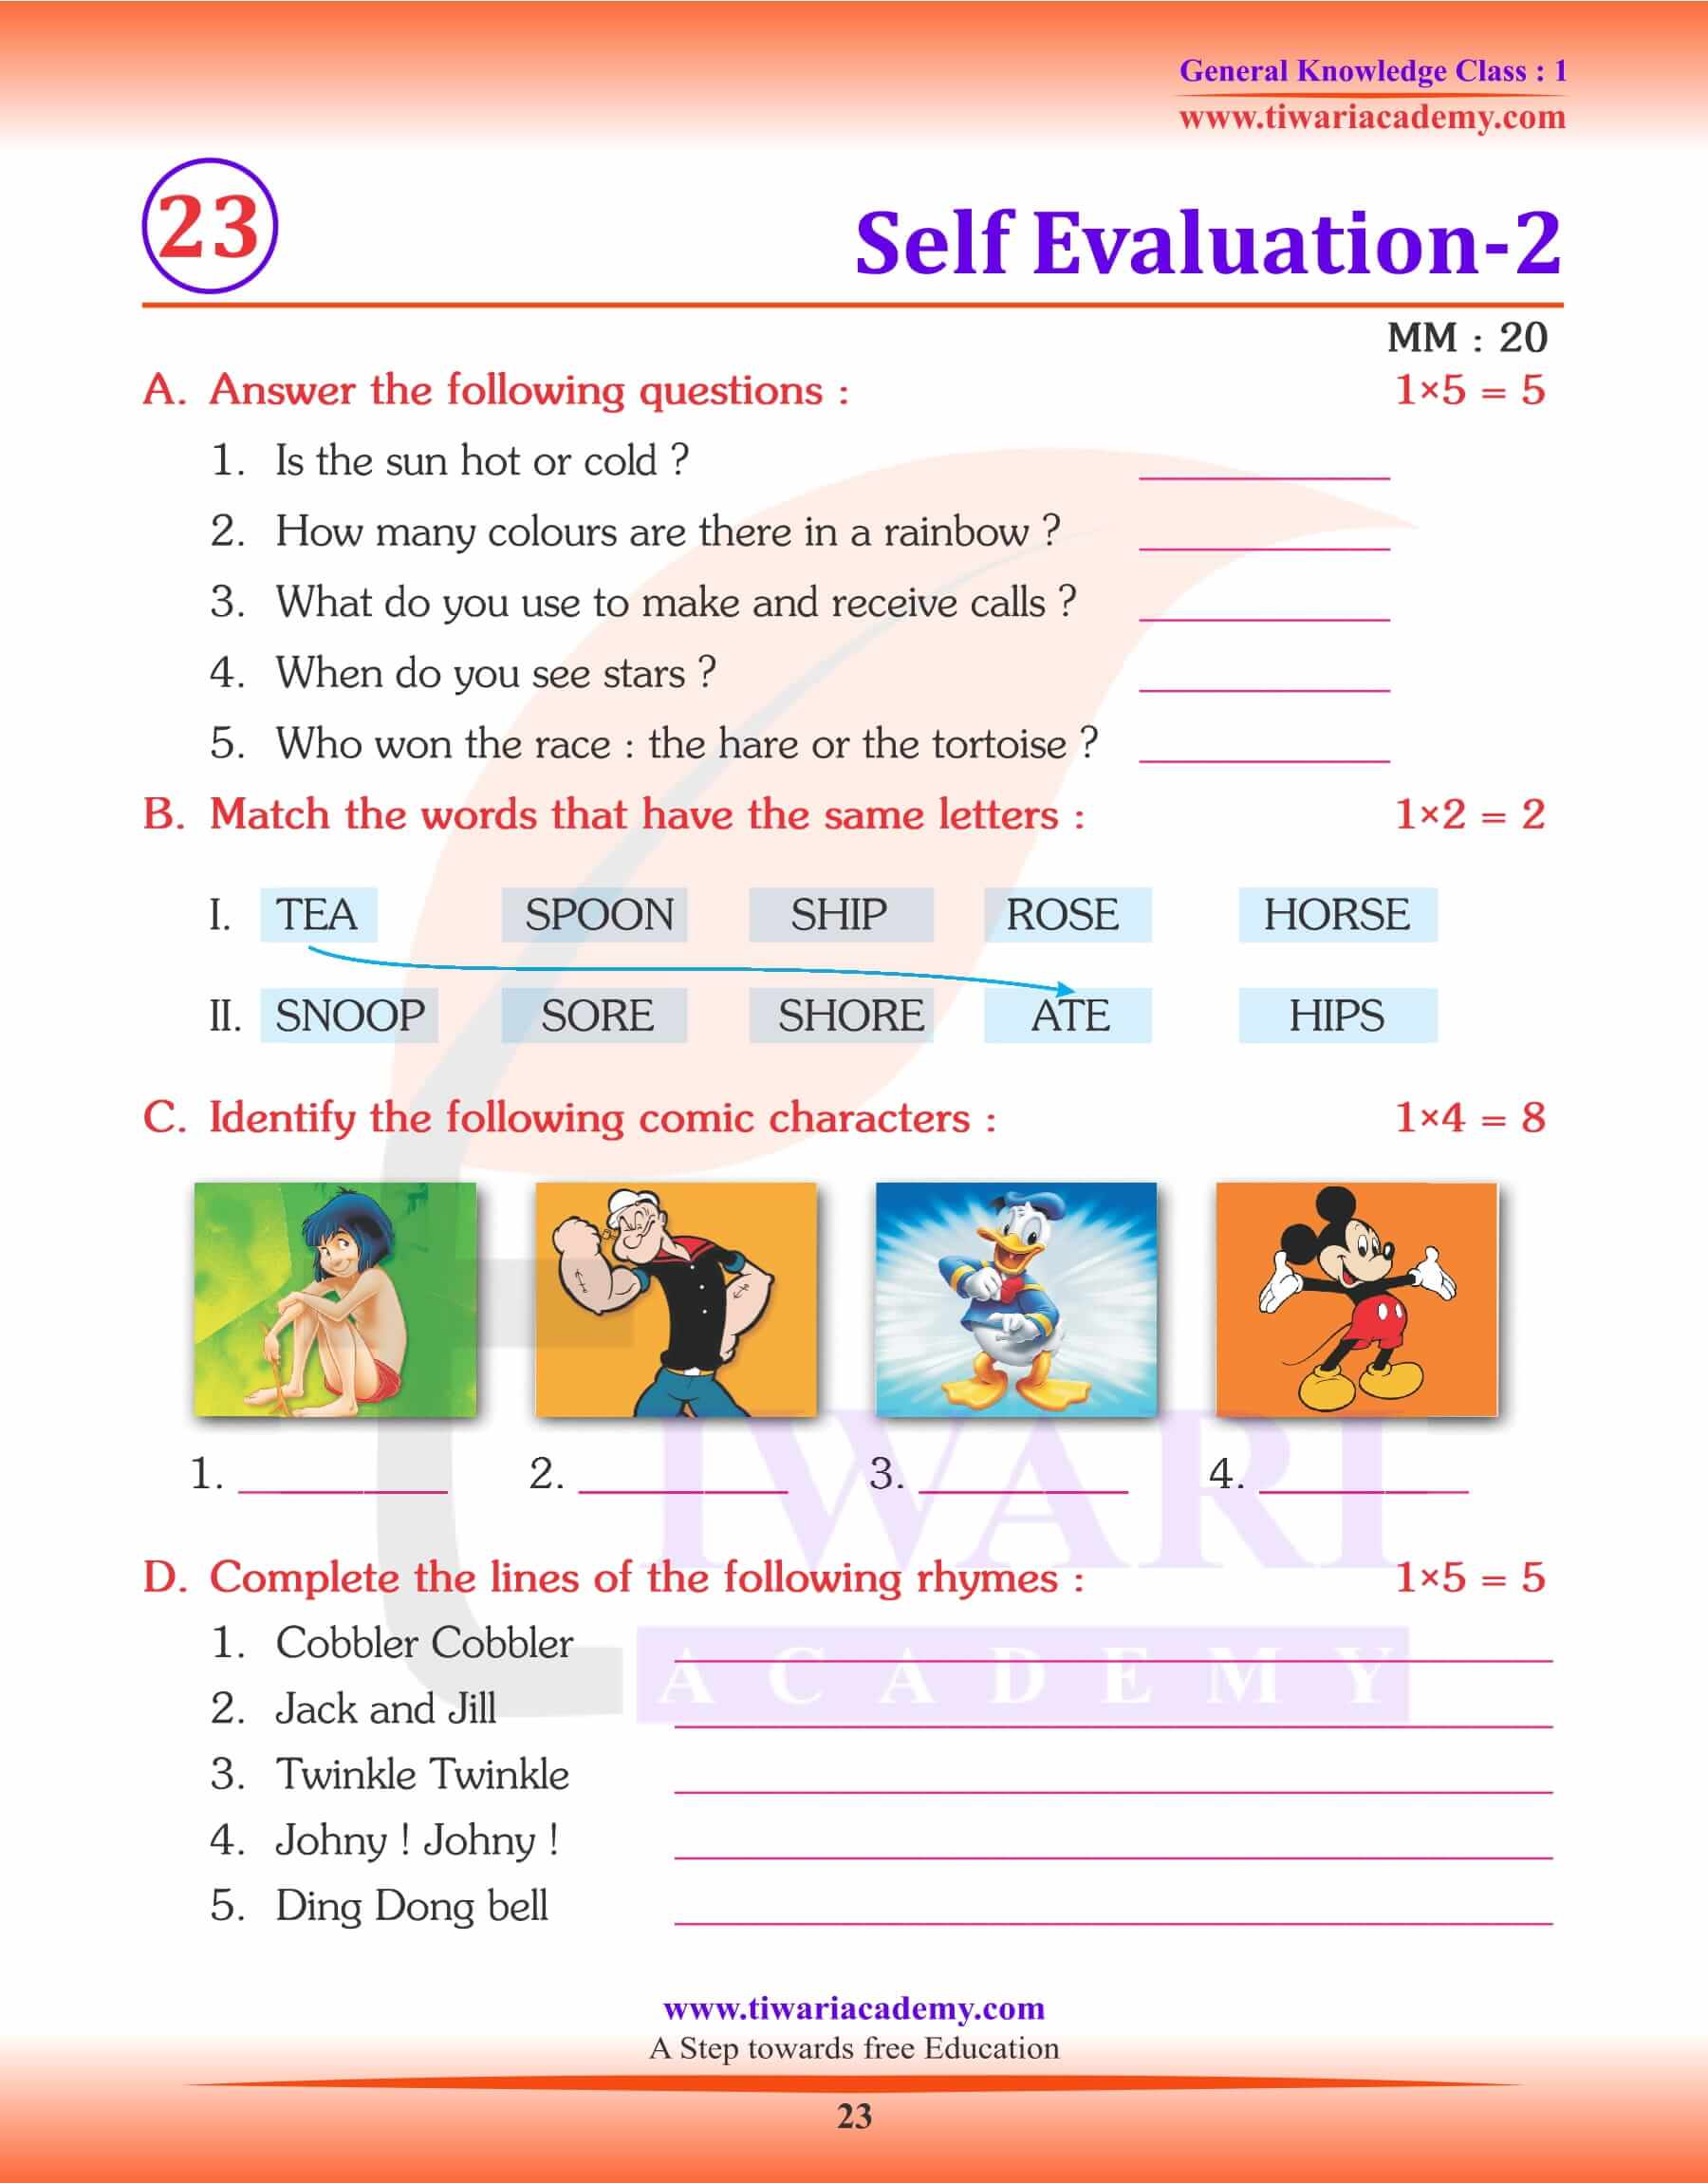 Self Evaluation GK Test-2